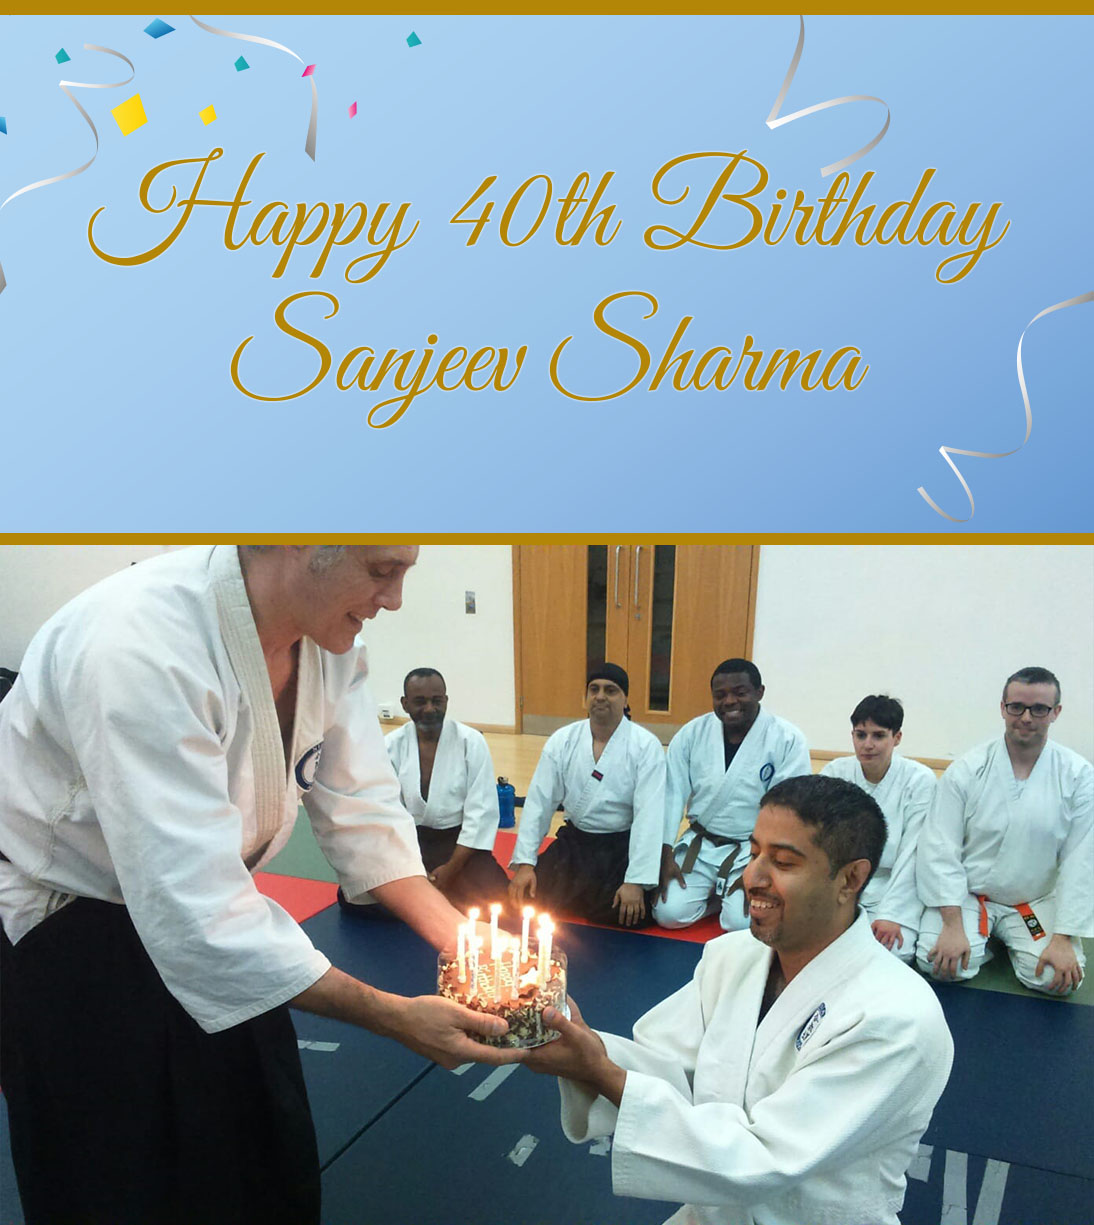 Happy 40th Birthday Sanjeev Sharma!